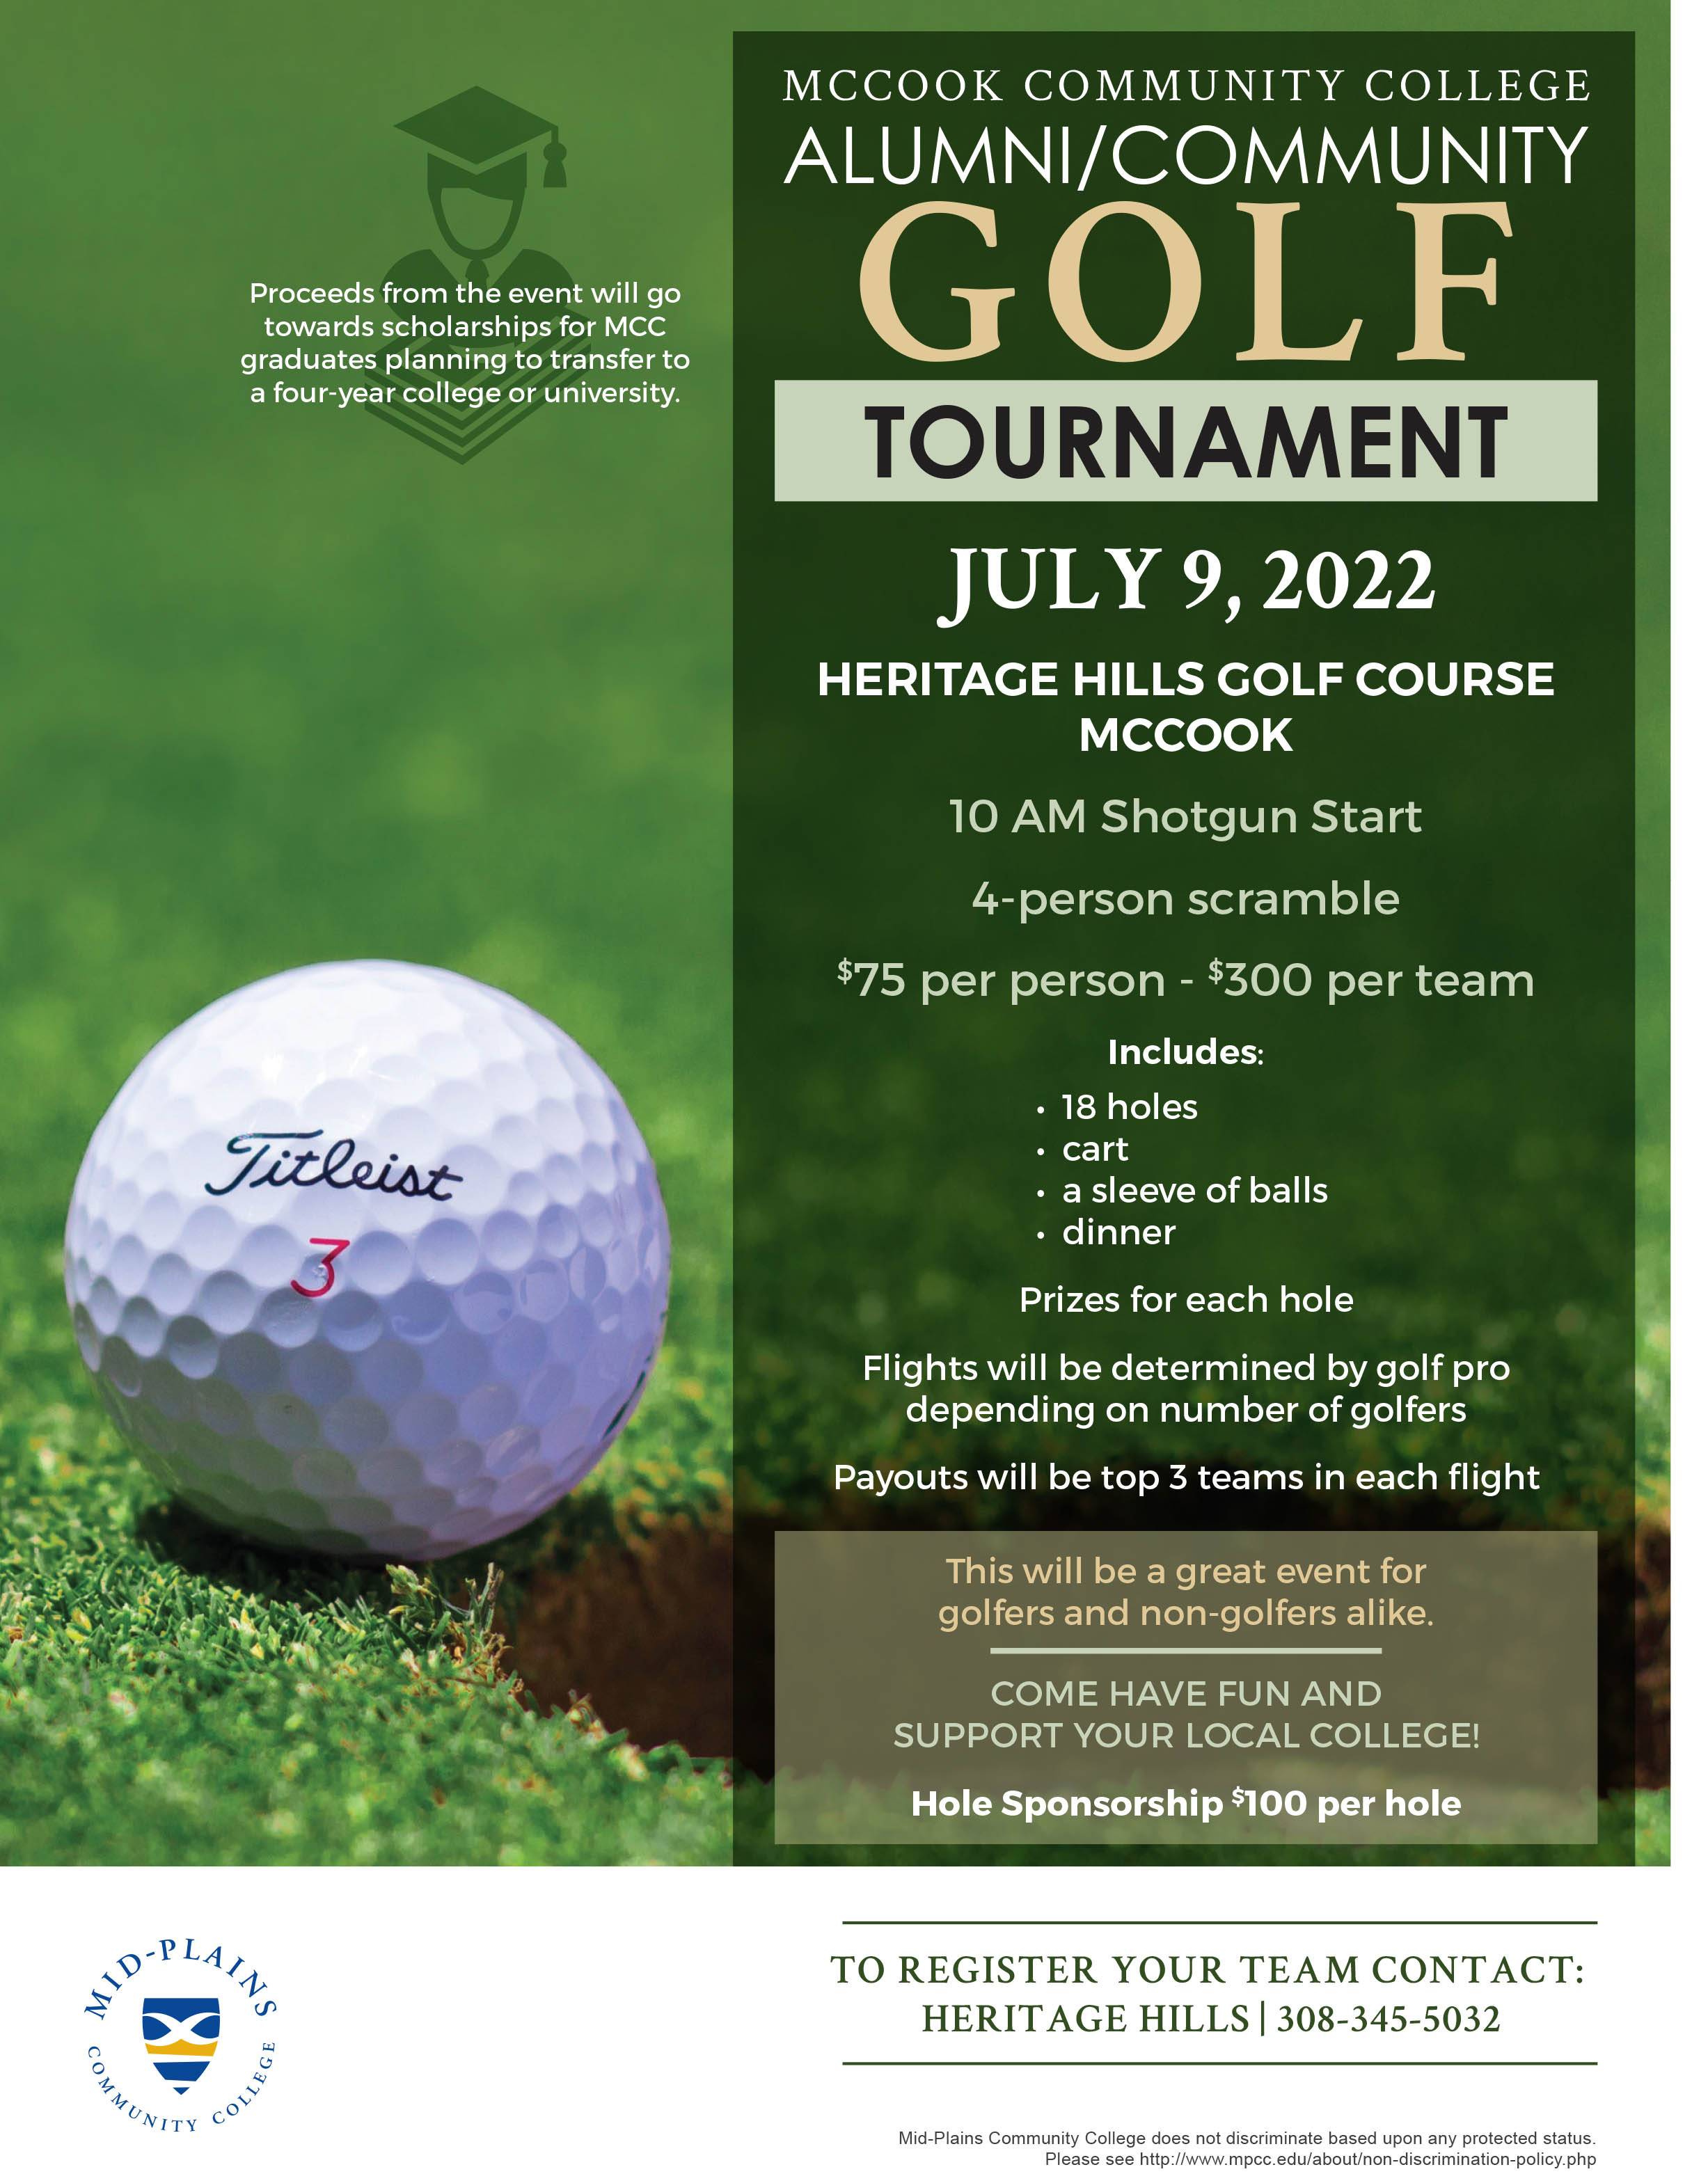 The 2022 MCC alumni/community golf tournament July 9